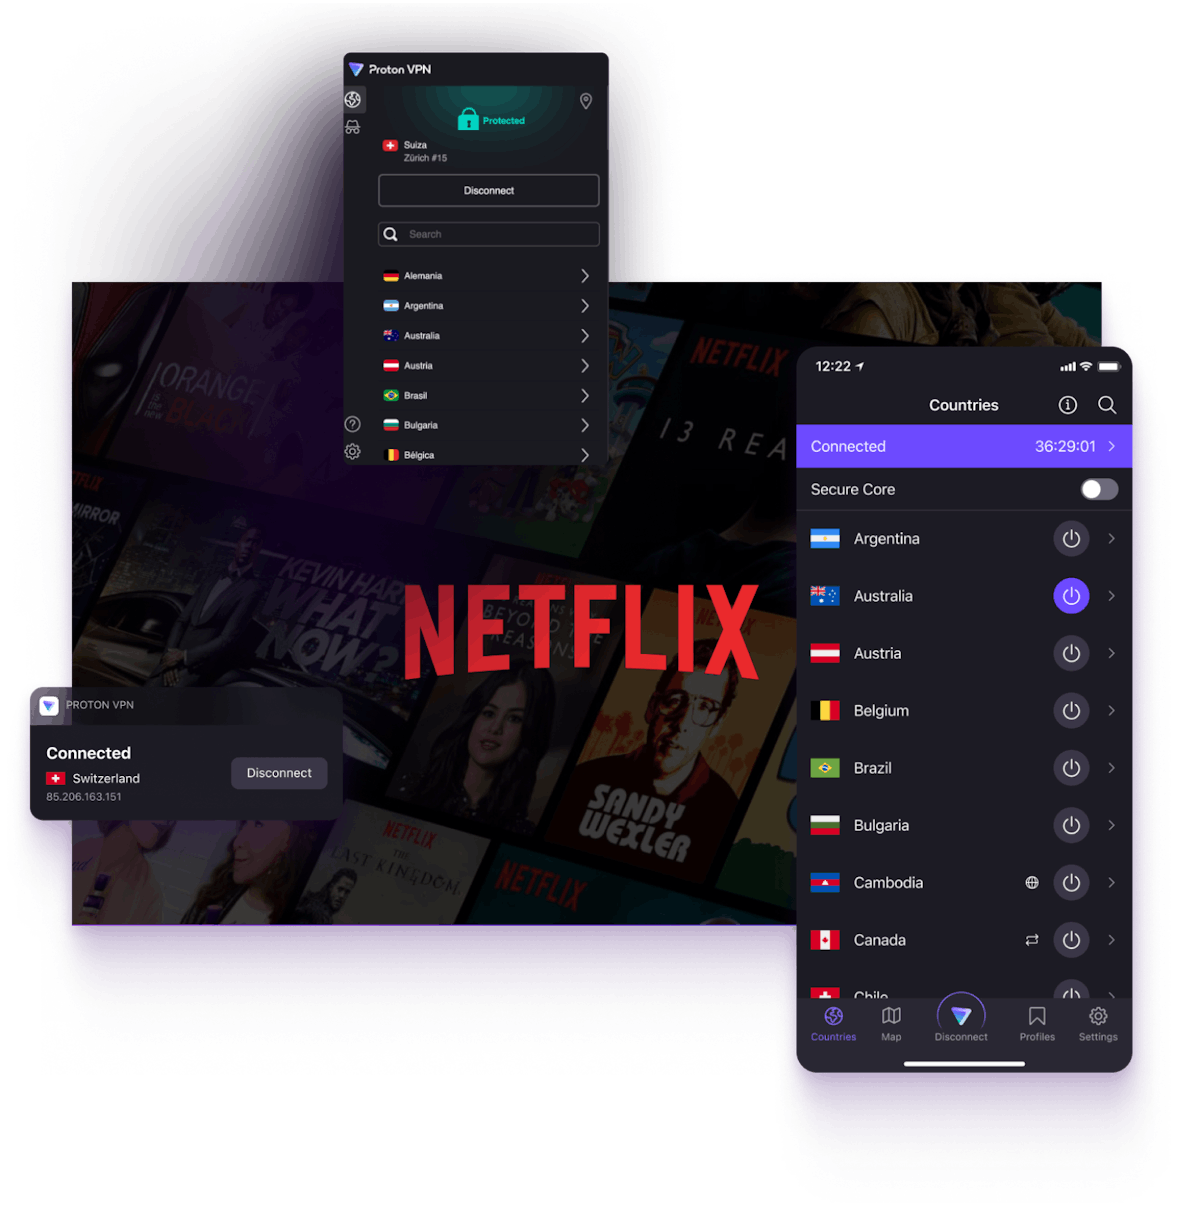 Can I watch Netflix using Proton VPN?